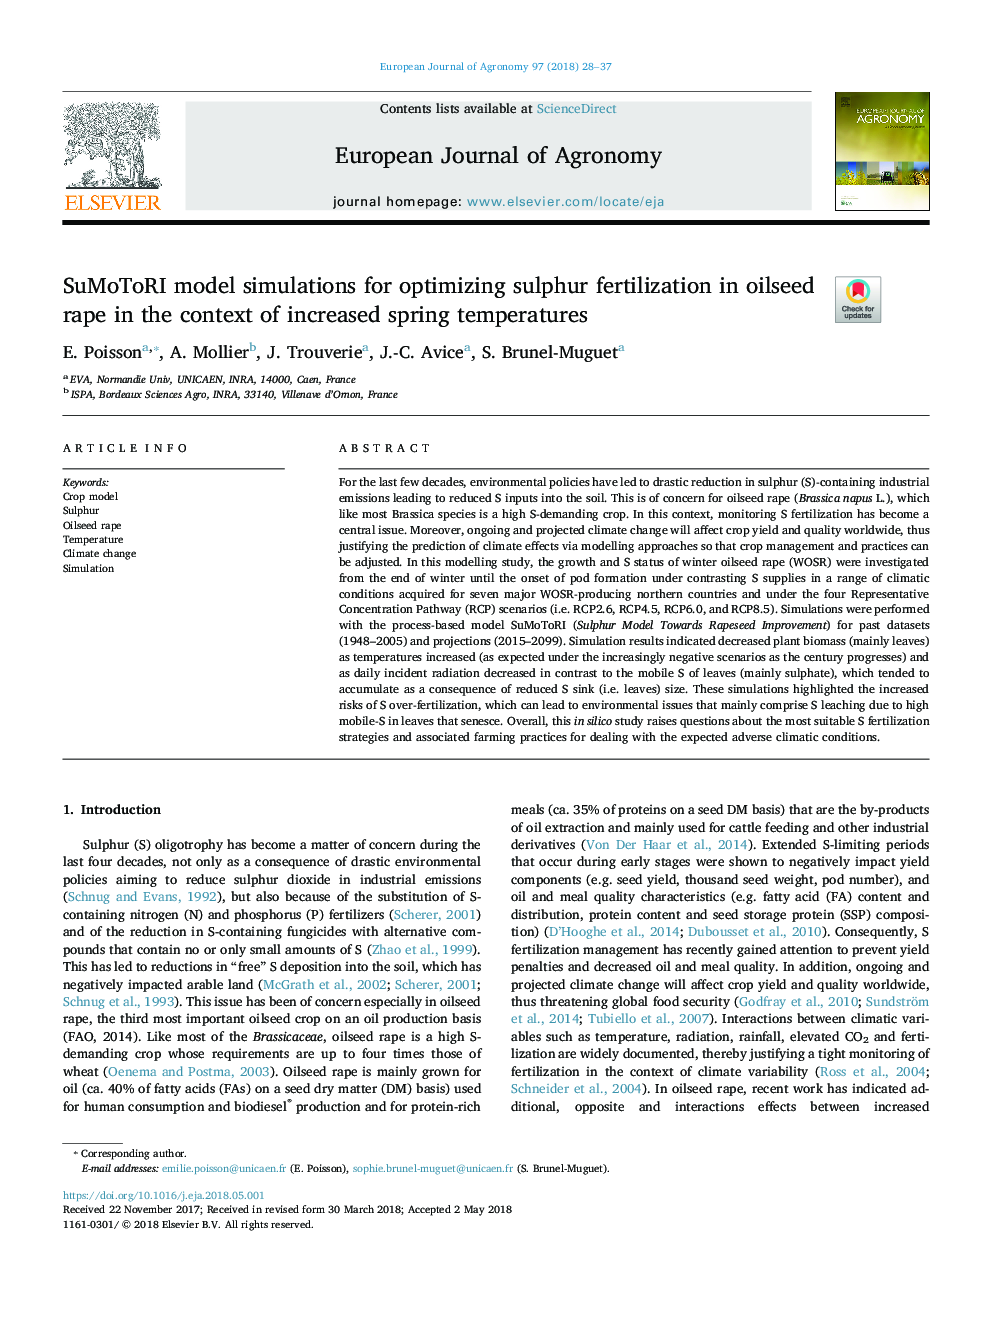 SuMoToRI model simulations for optimizing sulphur fertilization in oilseed rape in the context of increased spring temperatures